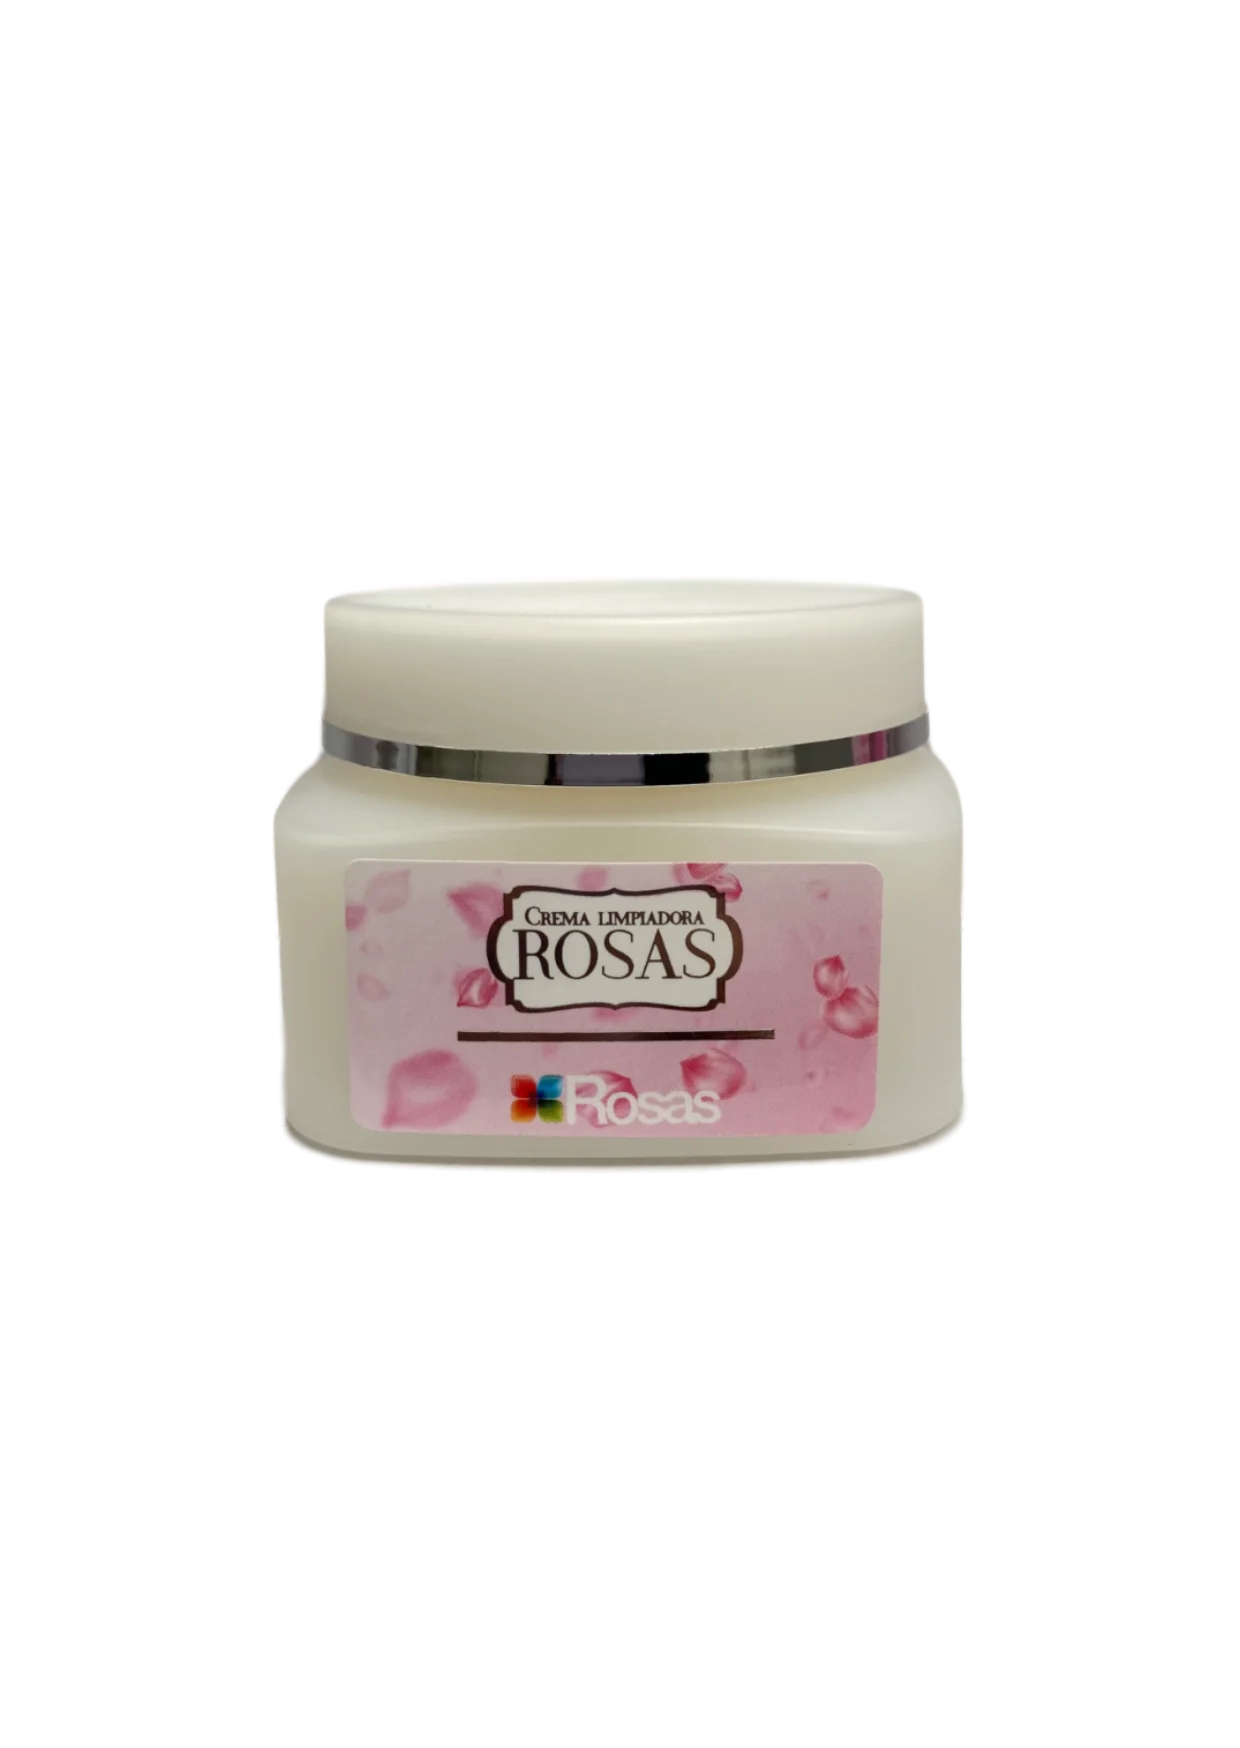 Crema Limpiadora Rosas Edición Especial * 30 g